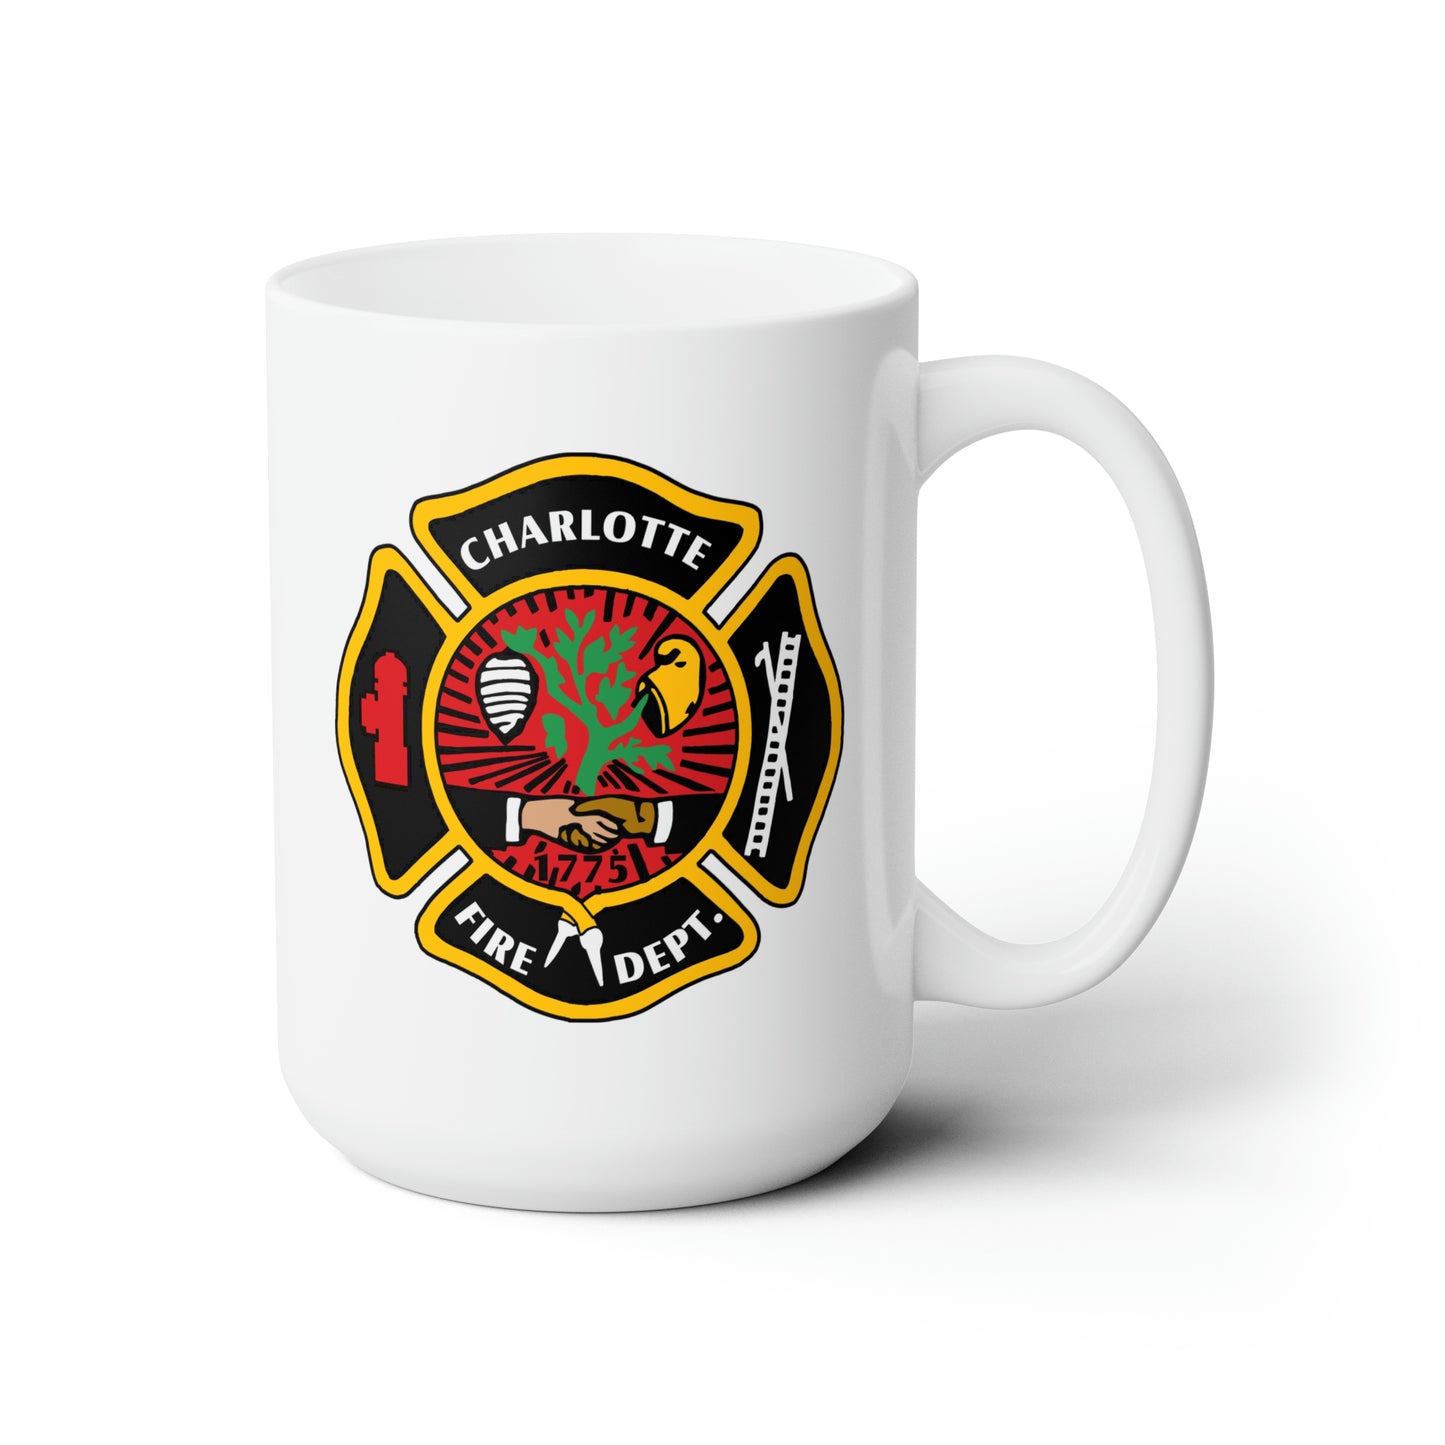 Charlotte Fire Department Coffee Mug - Double Sided White Ceramic 15oz by TheGlassyLass.com